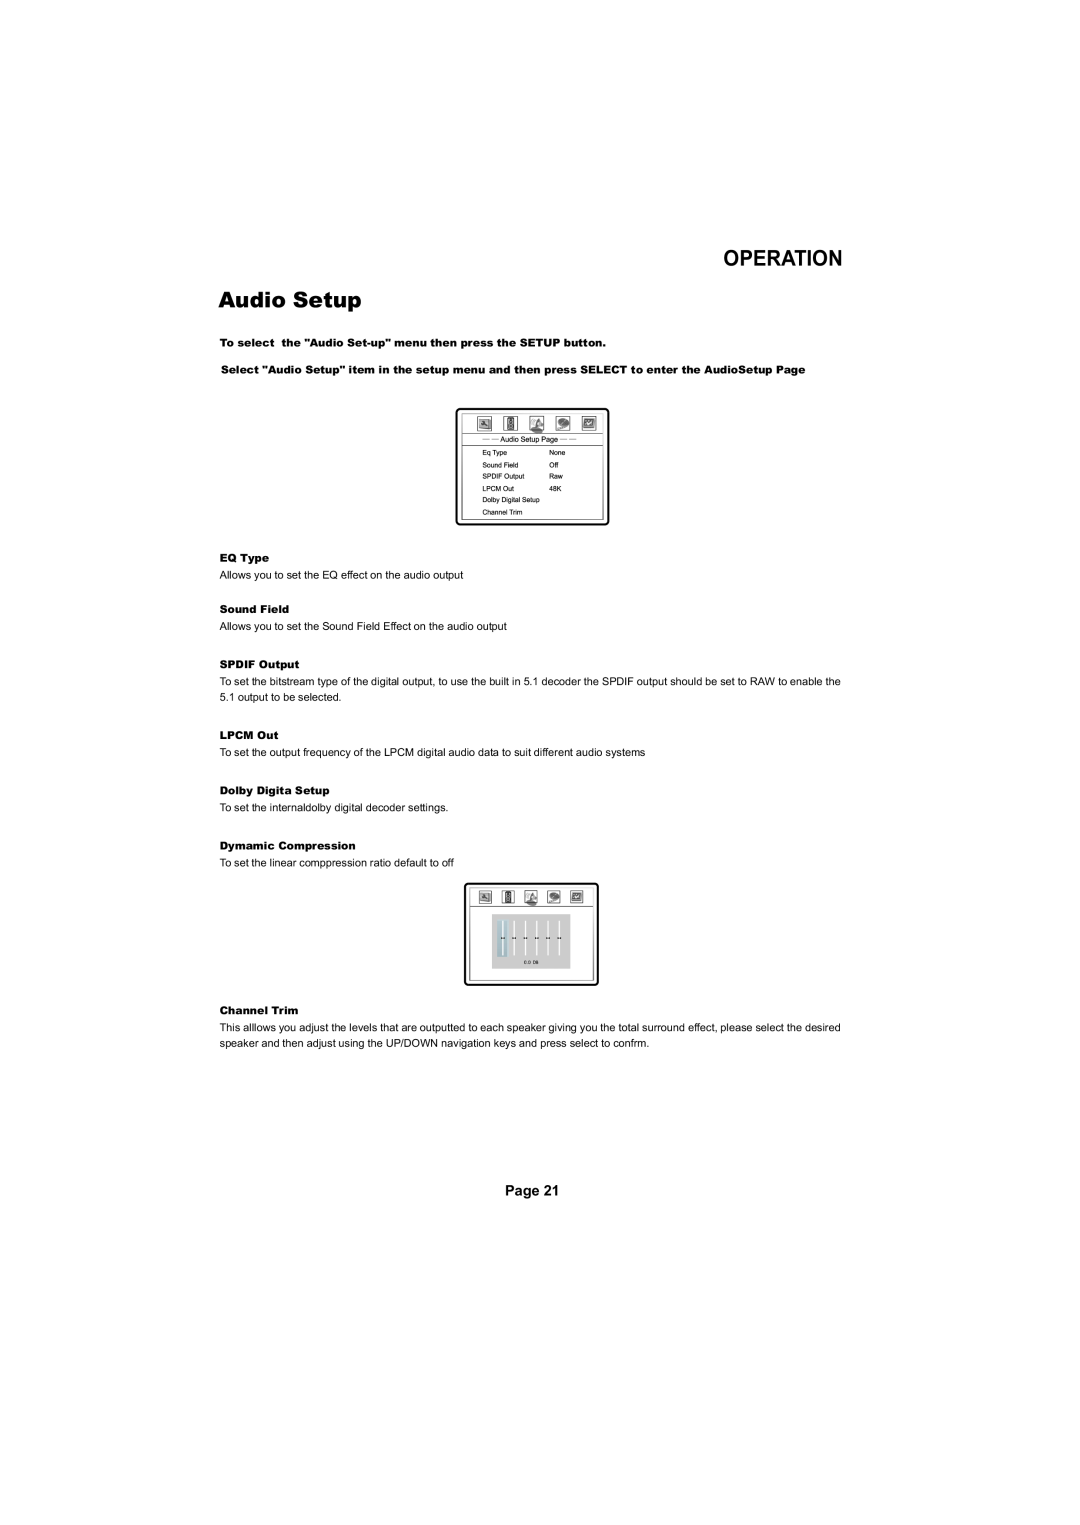 Cambridge Audio SERIES50 OPERATION Audio Setup, Page, EQ Type, Sound Field, SPDIF Output, LPCM Out, Dolby Digita Setup 